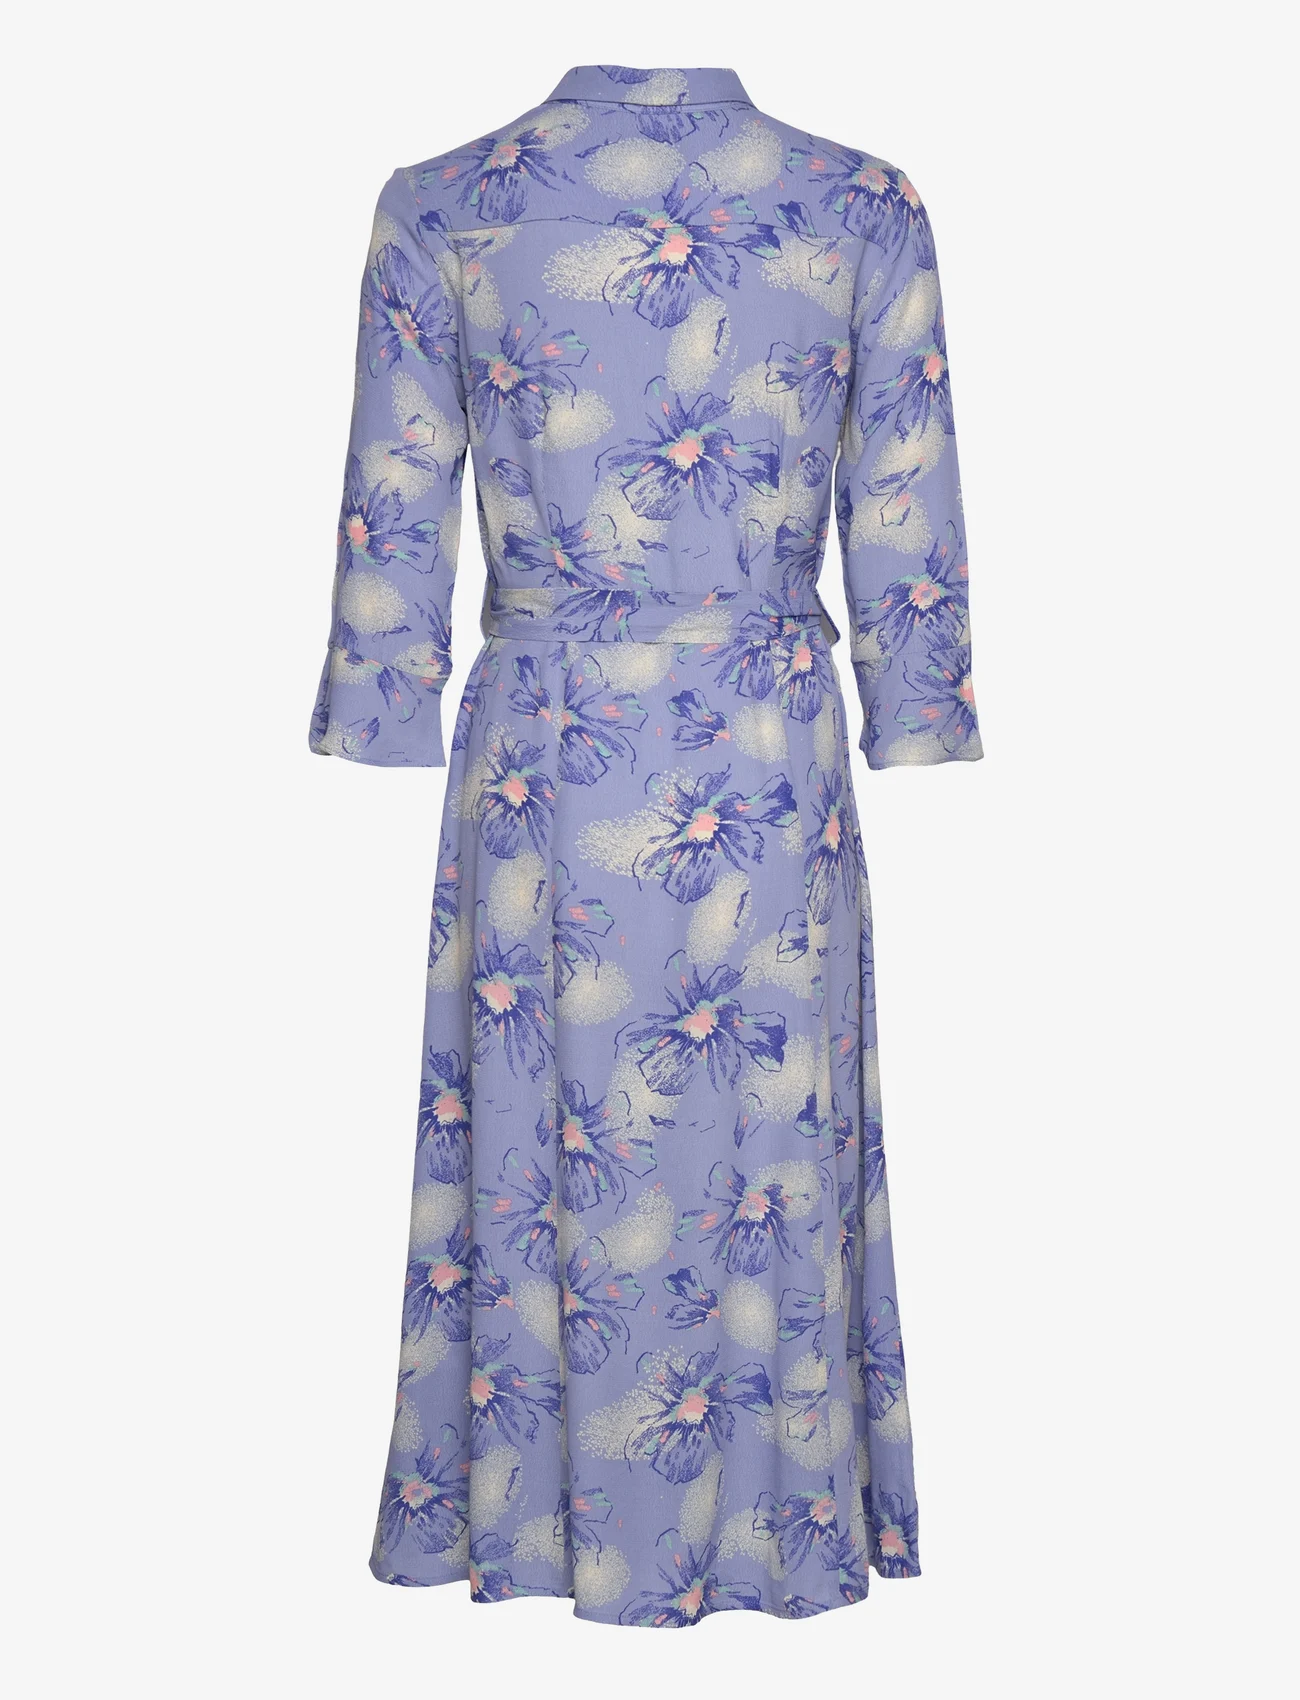 Noa Noa - LivaNN Dress - skjortekjoler - print blue/rose - 1